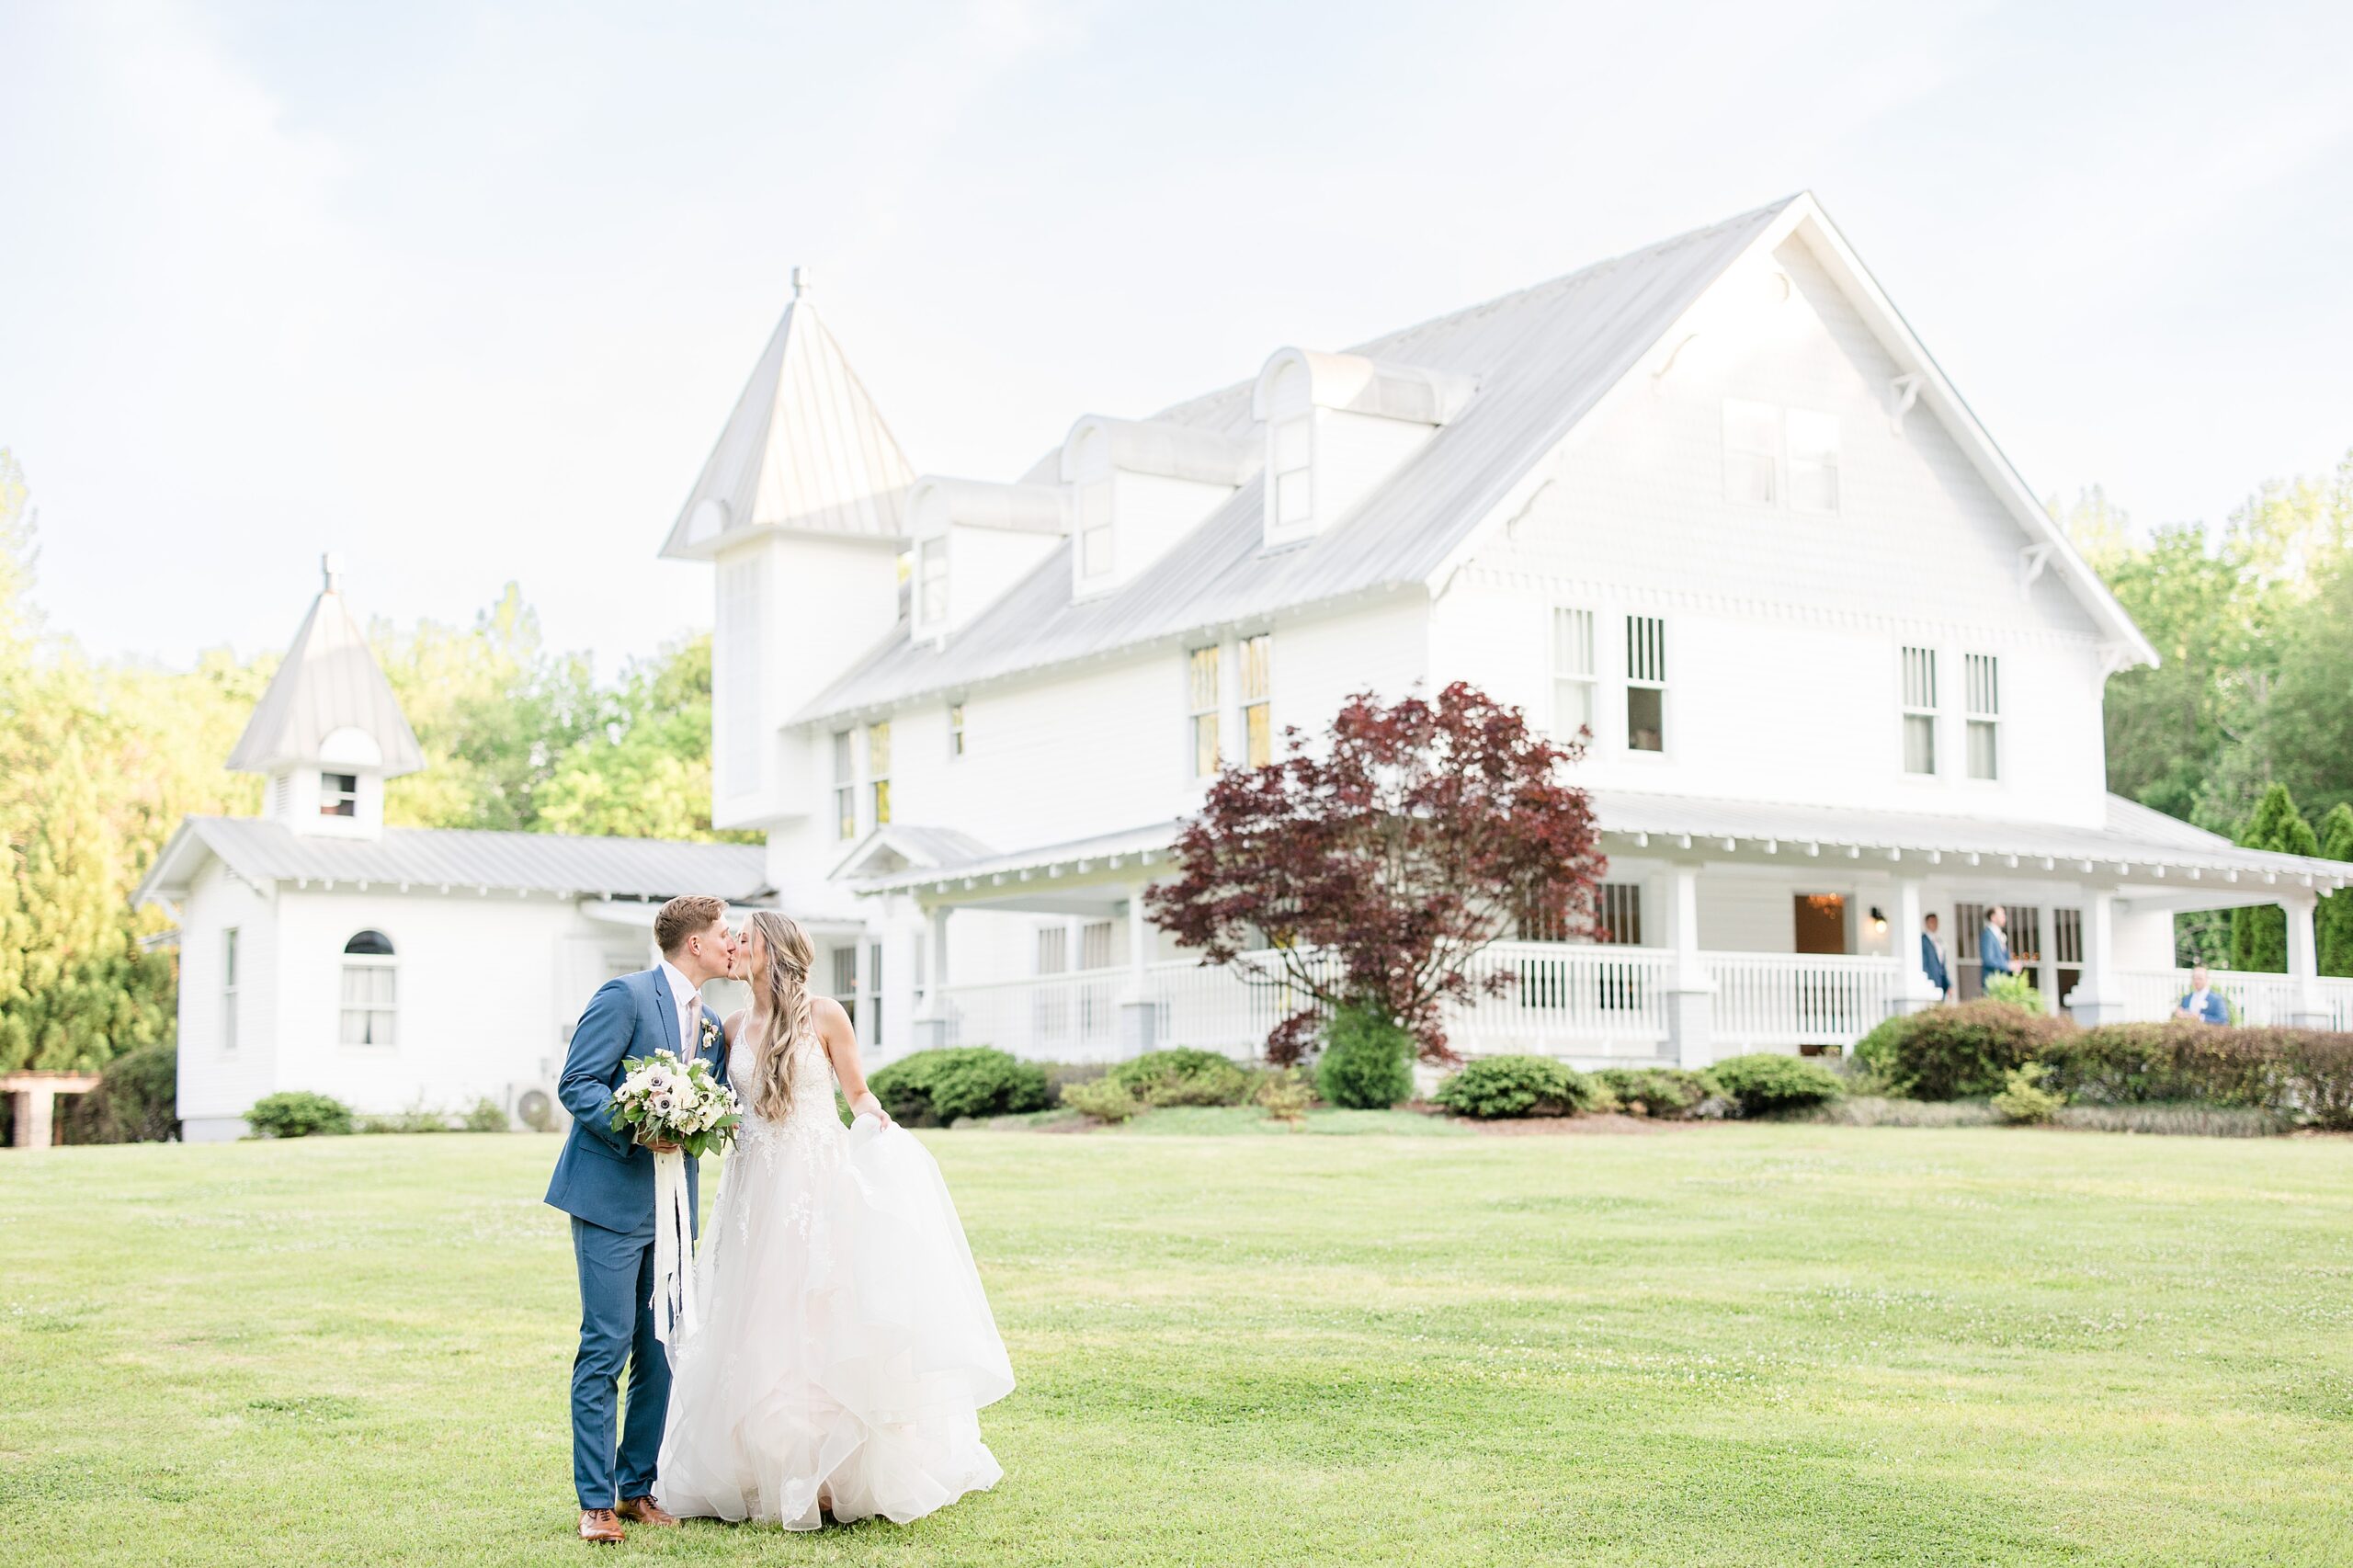 Sonnet House Spring Wedding for Samantha + Conner - Katie & Alec Photography Birmingham, Alabama Wedding Photographers